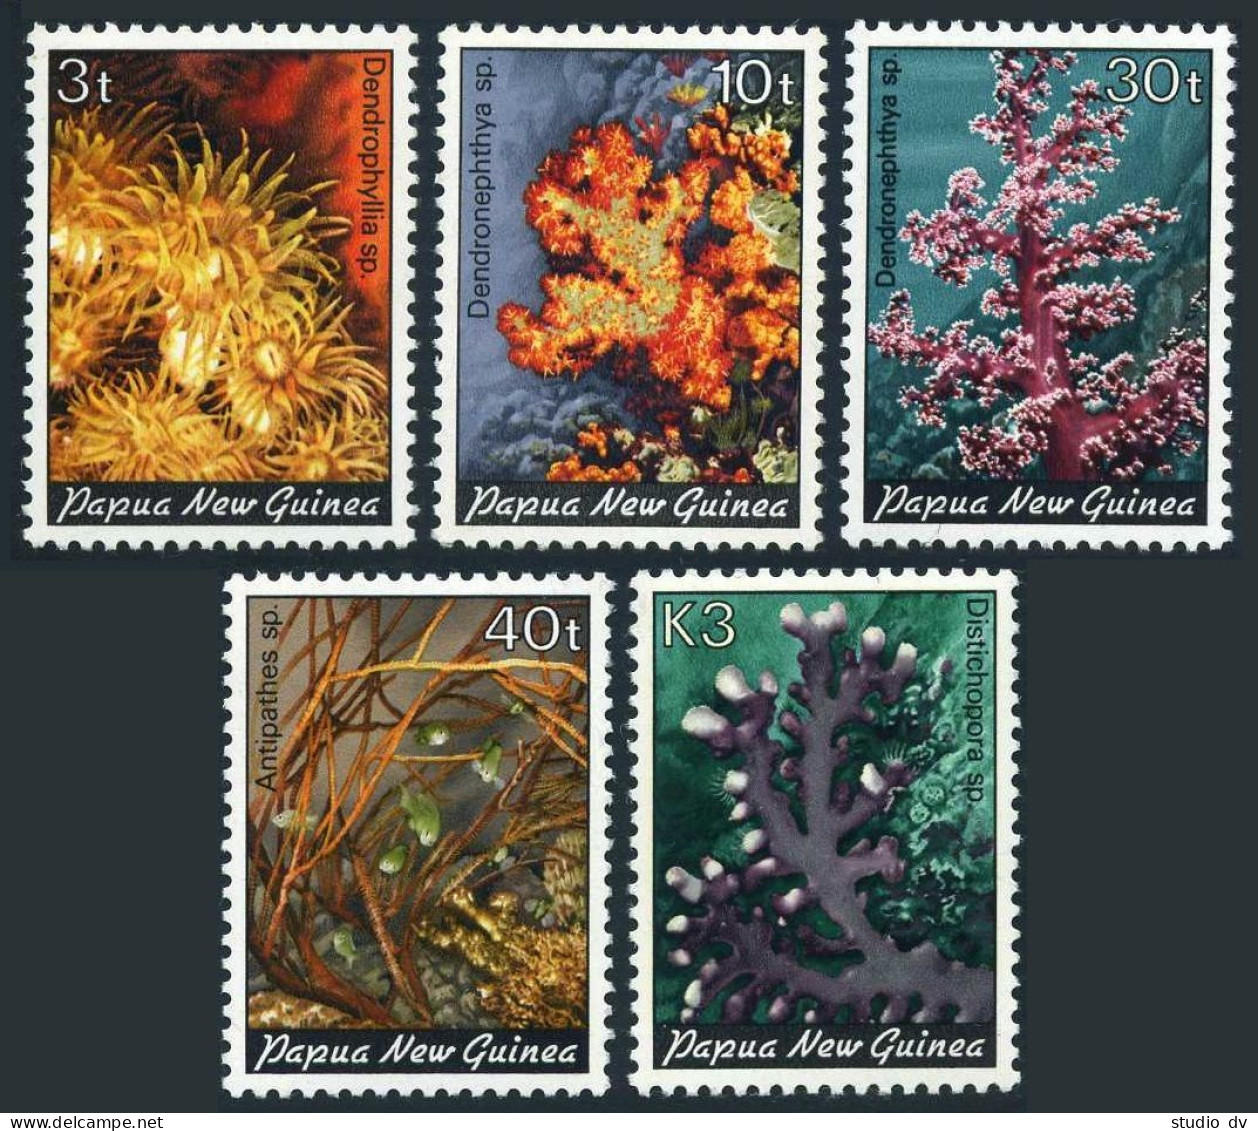 Papua New Guinea 575-579, MNH. Corals - 1983 (1). - Guinée (1958-...)